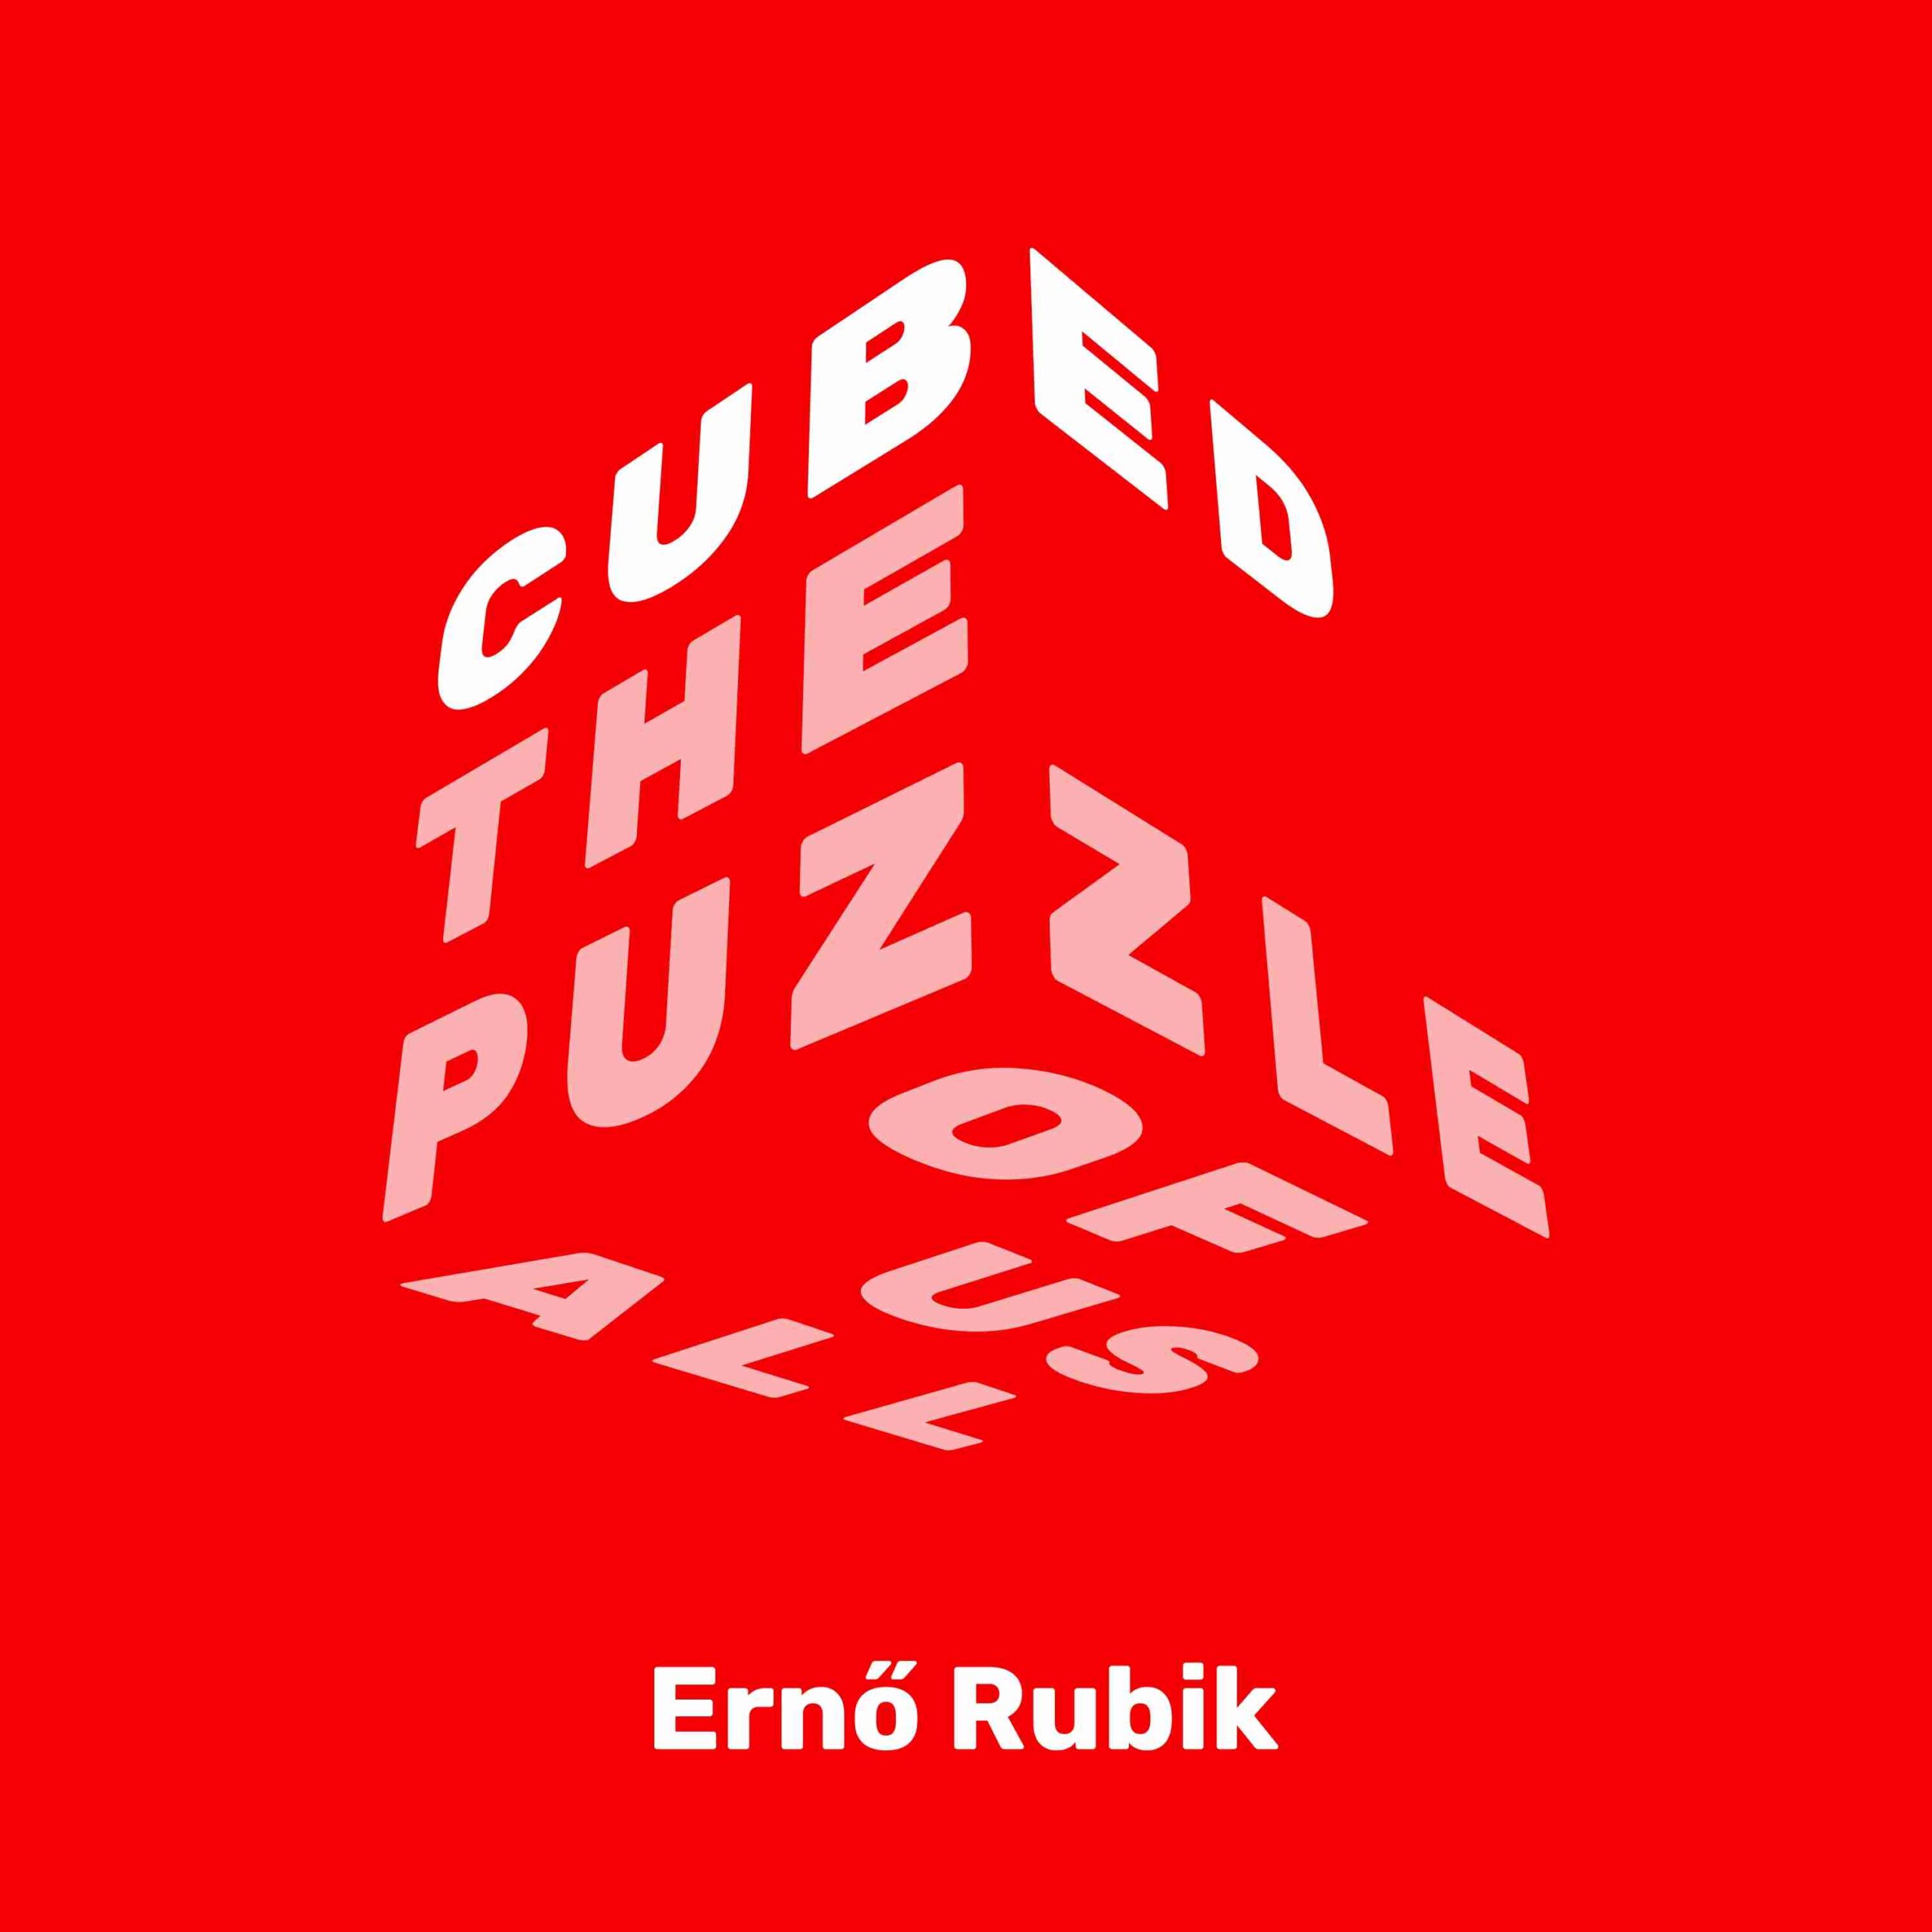 Cubed byErno Rubik Audiobook. 19.99 USD